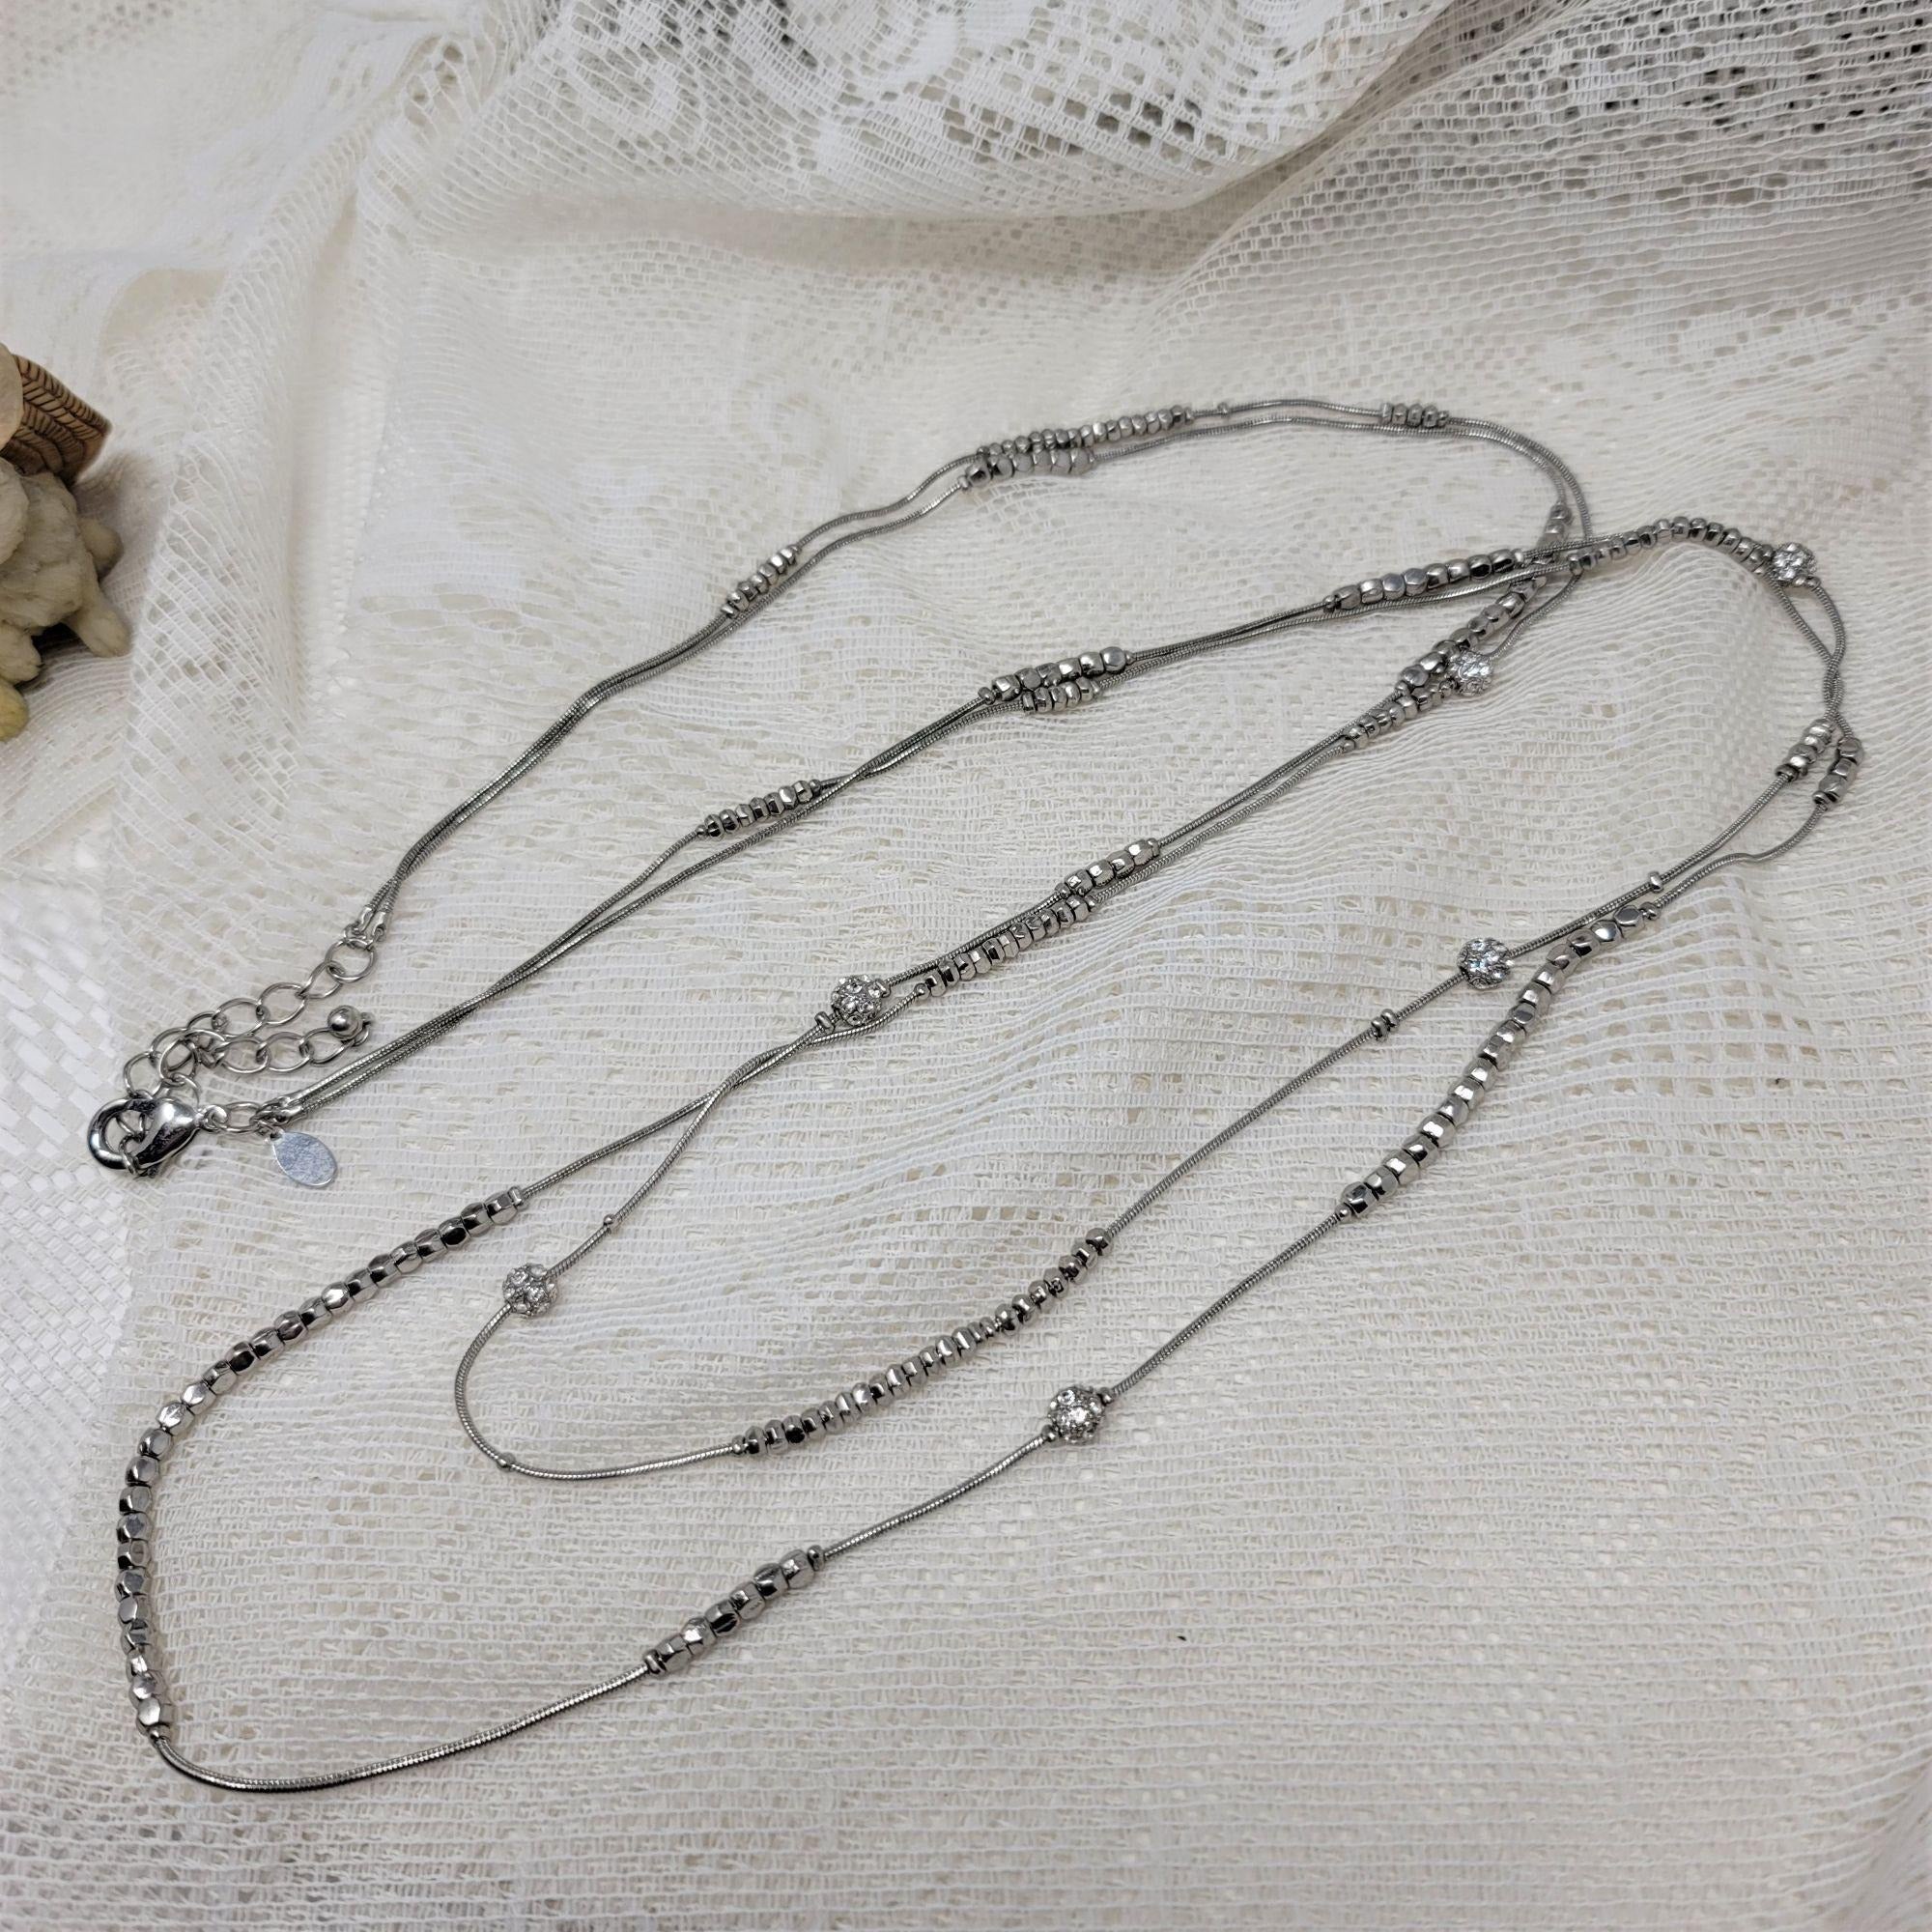 Chico's Modern Snake Chain & Rhinestone Necklace